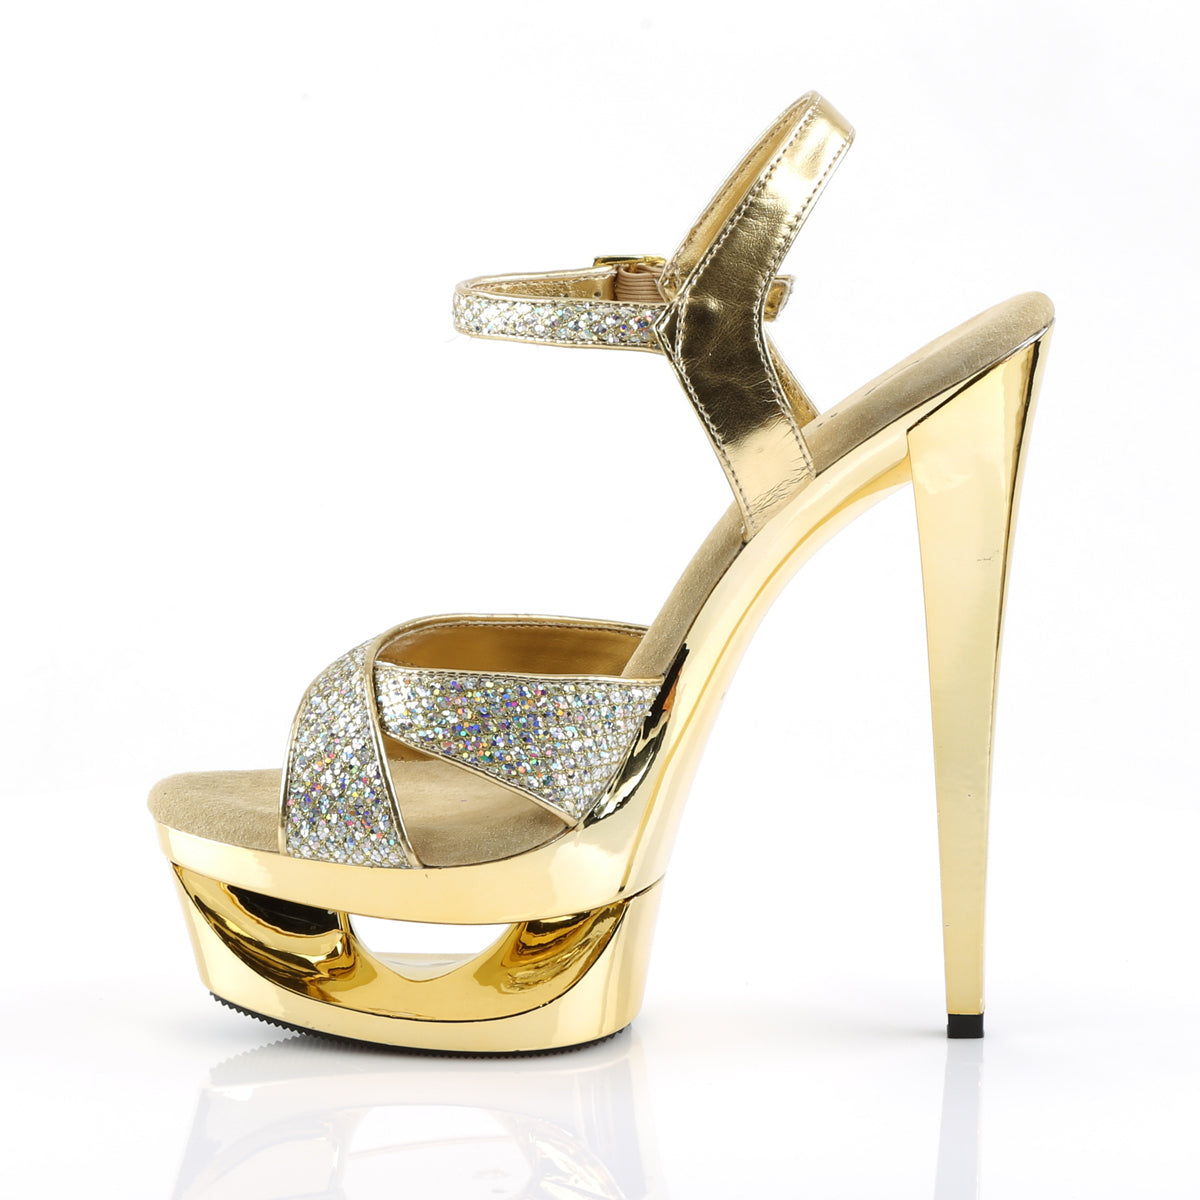 Pleaser Womens Sandals ECLIPSE-619G Gold Multi Gltr/Gold Chrome